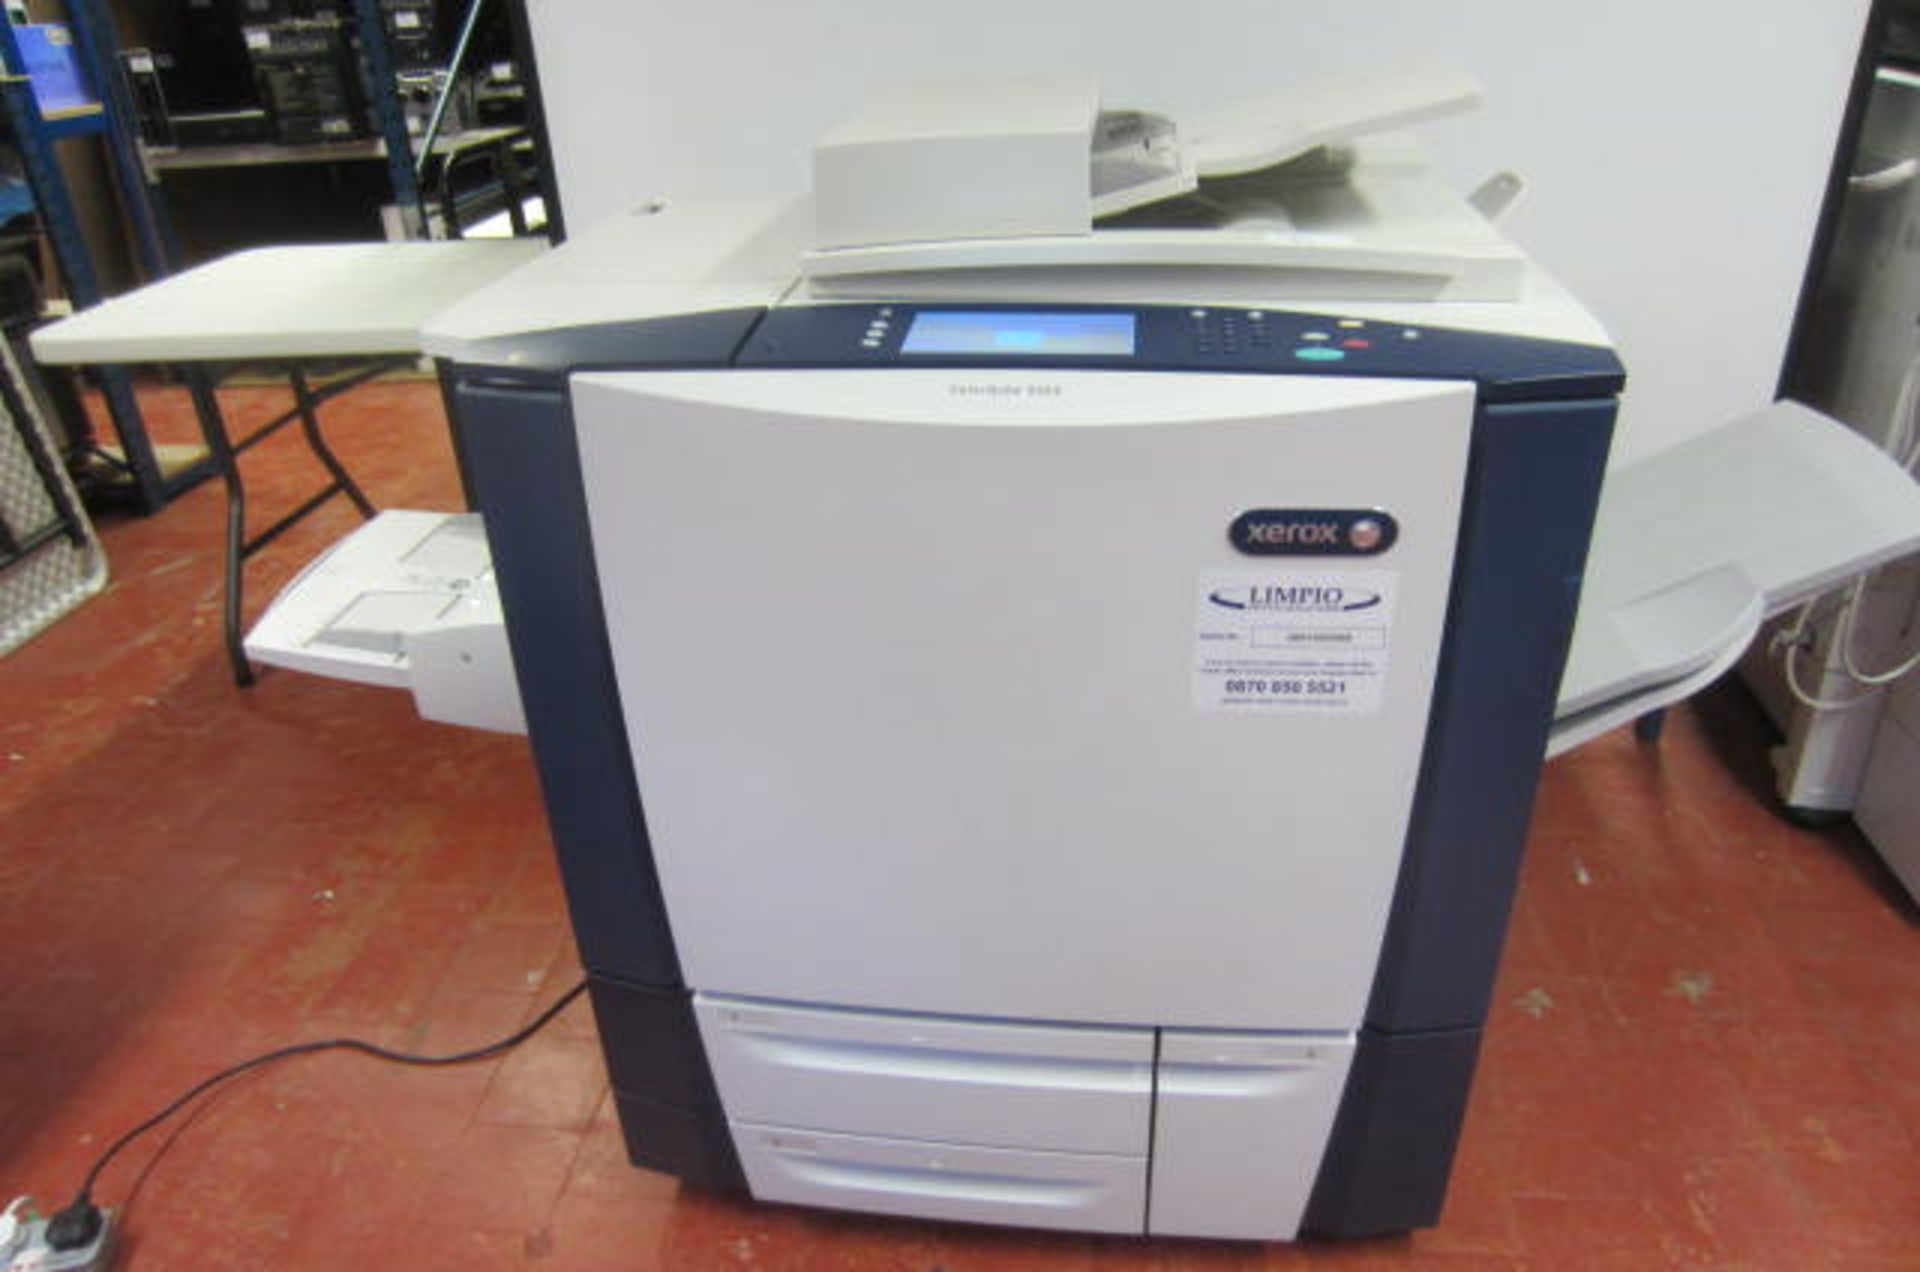 Xerox ColorQube 9303 Digital Colour Copier/Printer with Duplex Auto Document Feeder, Serial Number